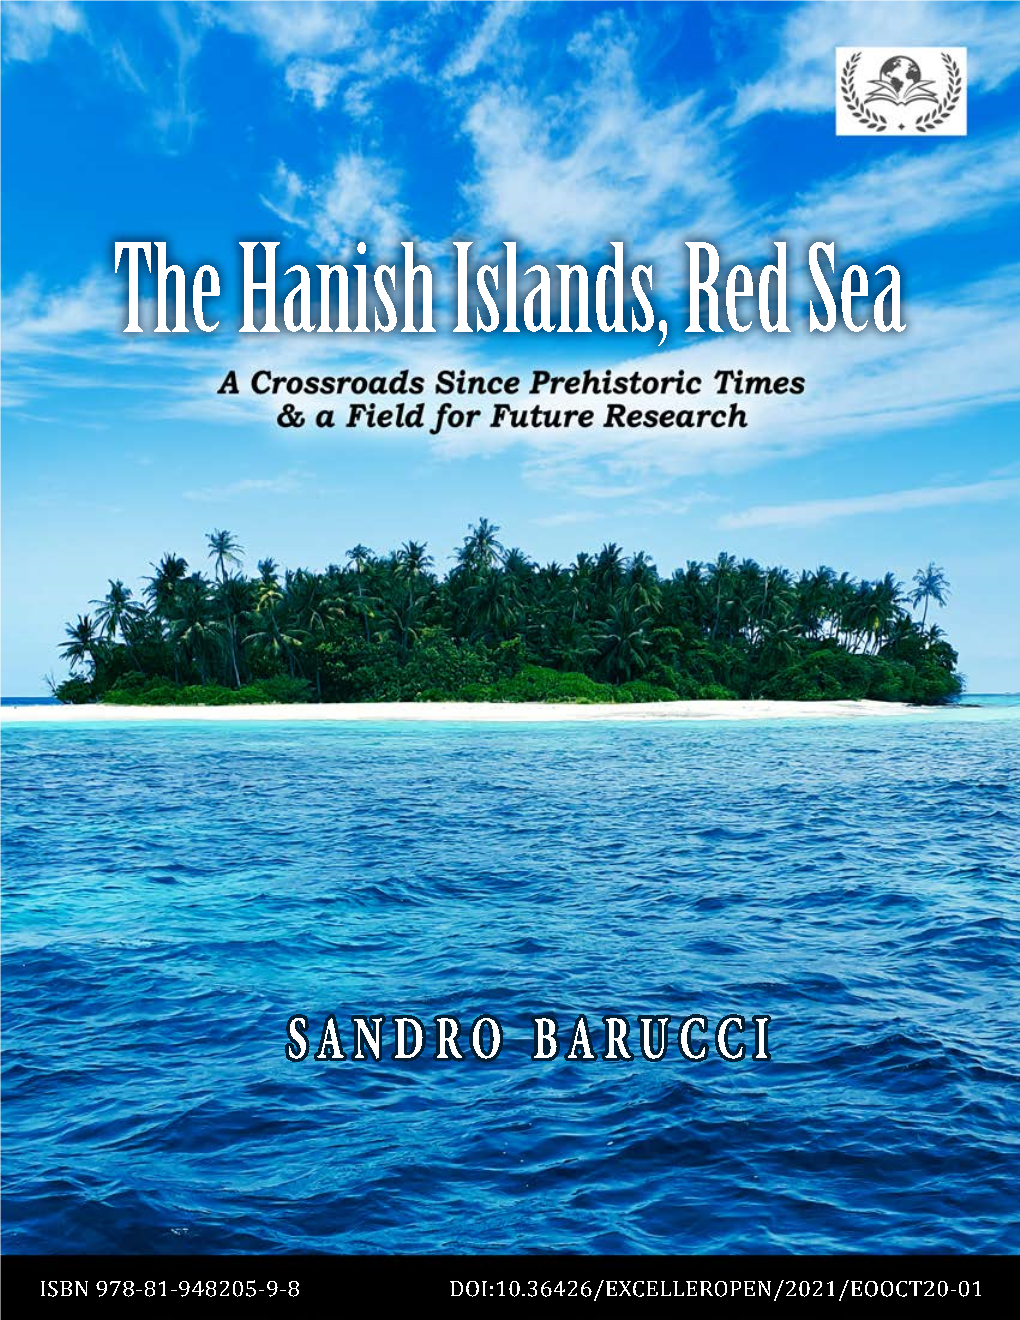 The Hanish Islands, Red Sea